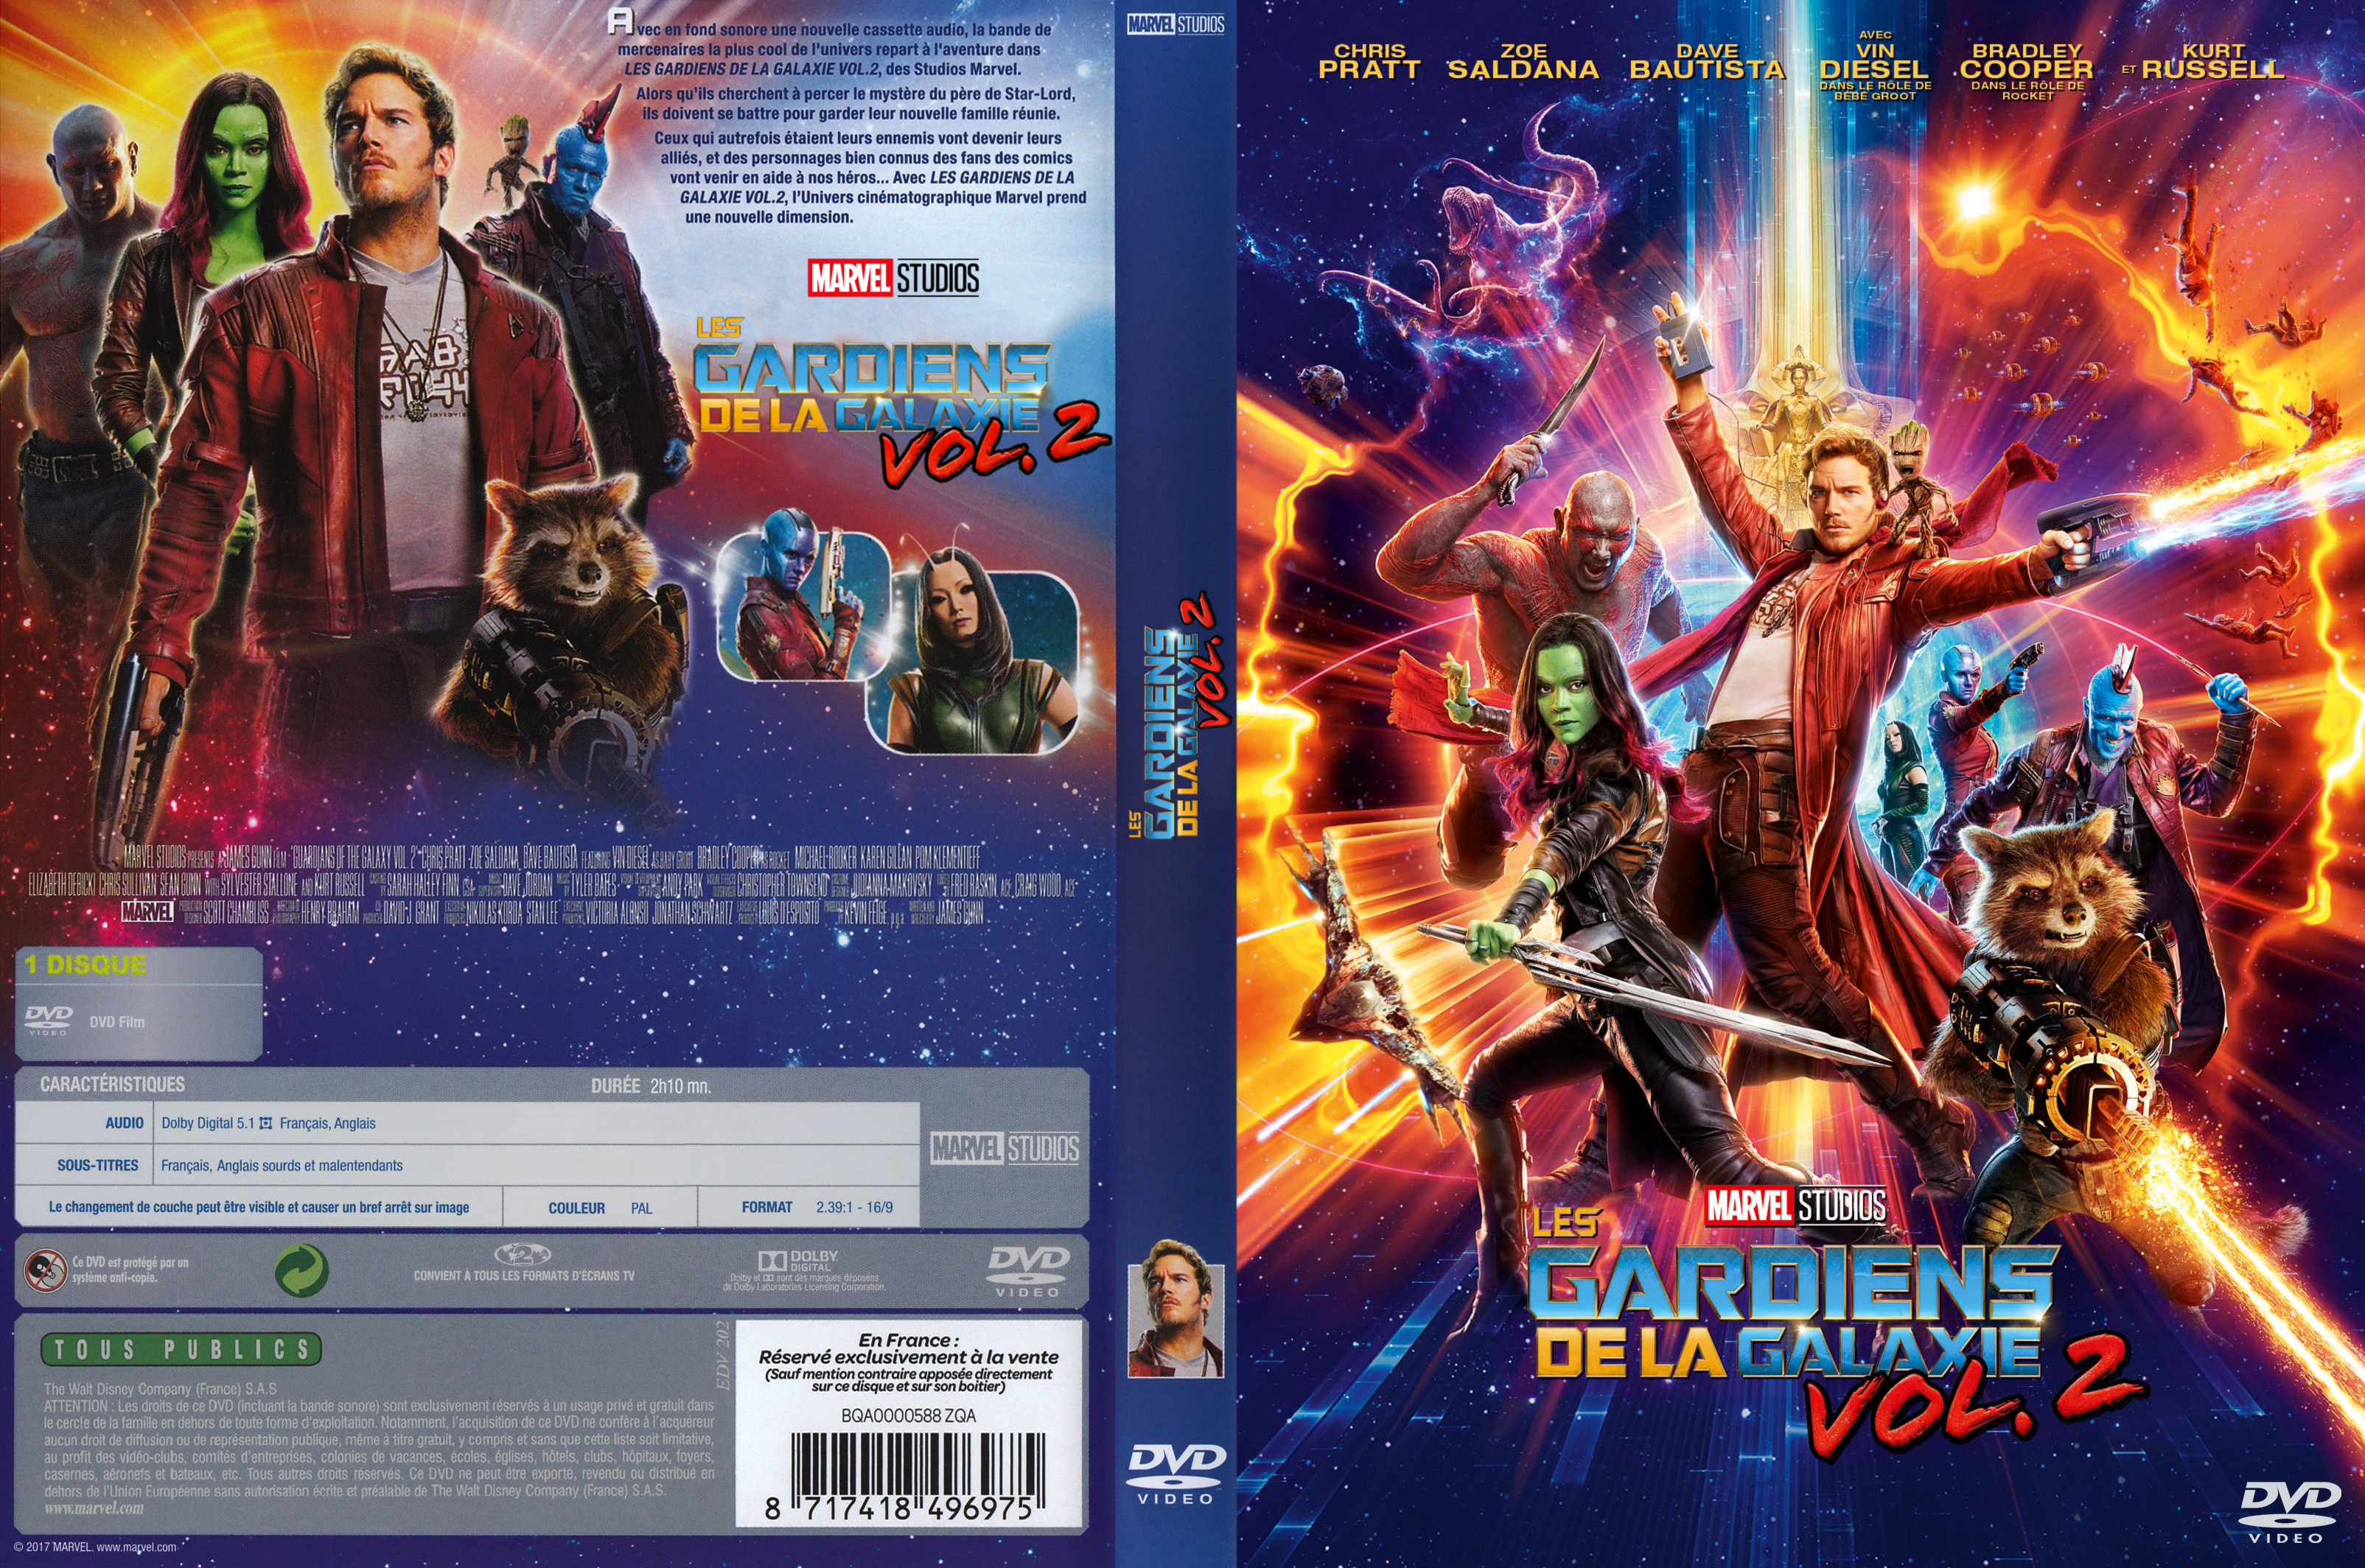 Jaquette DVD Les Gardiens de la Galaxie 2 custom